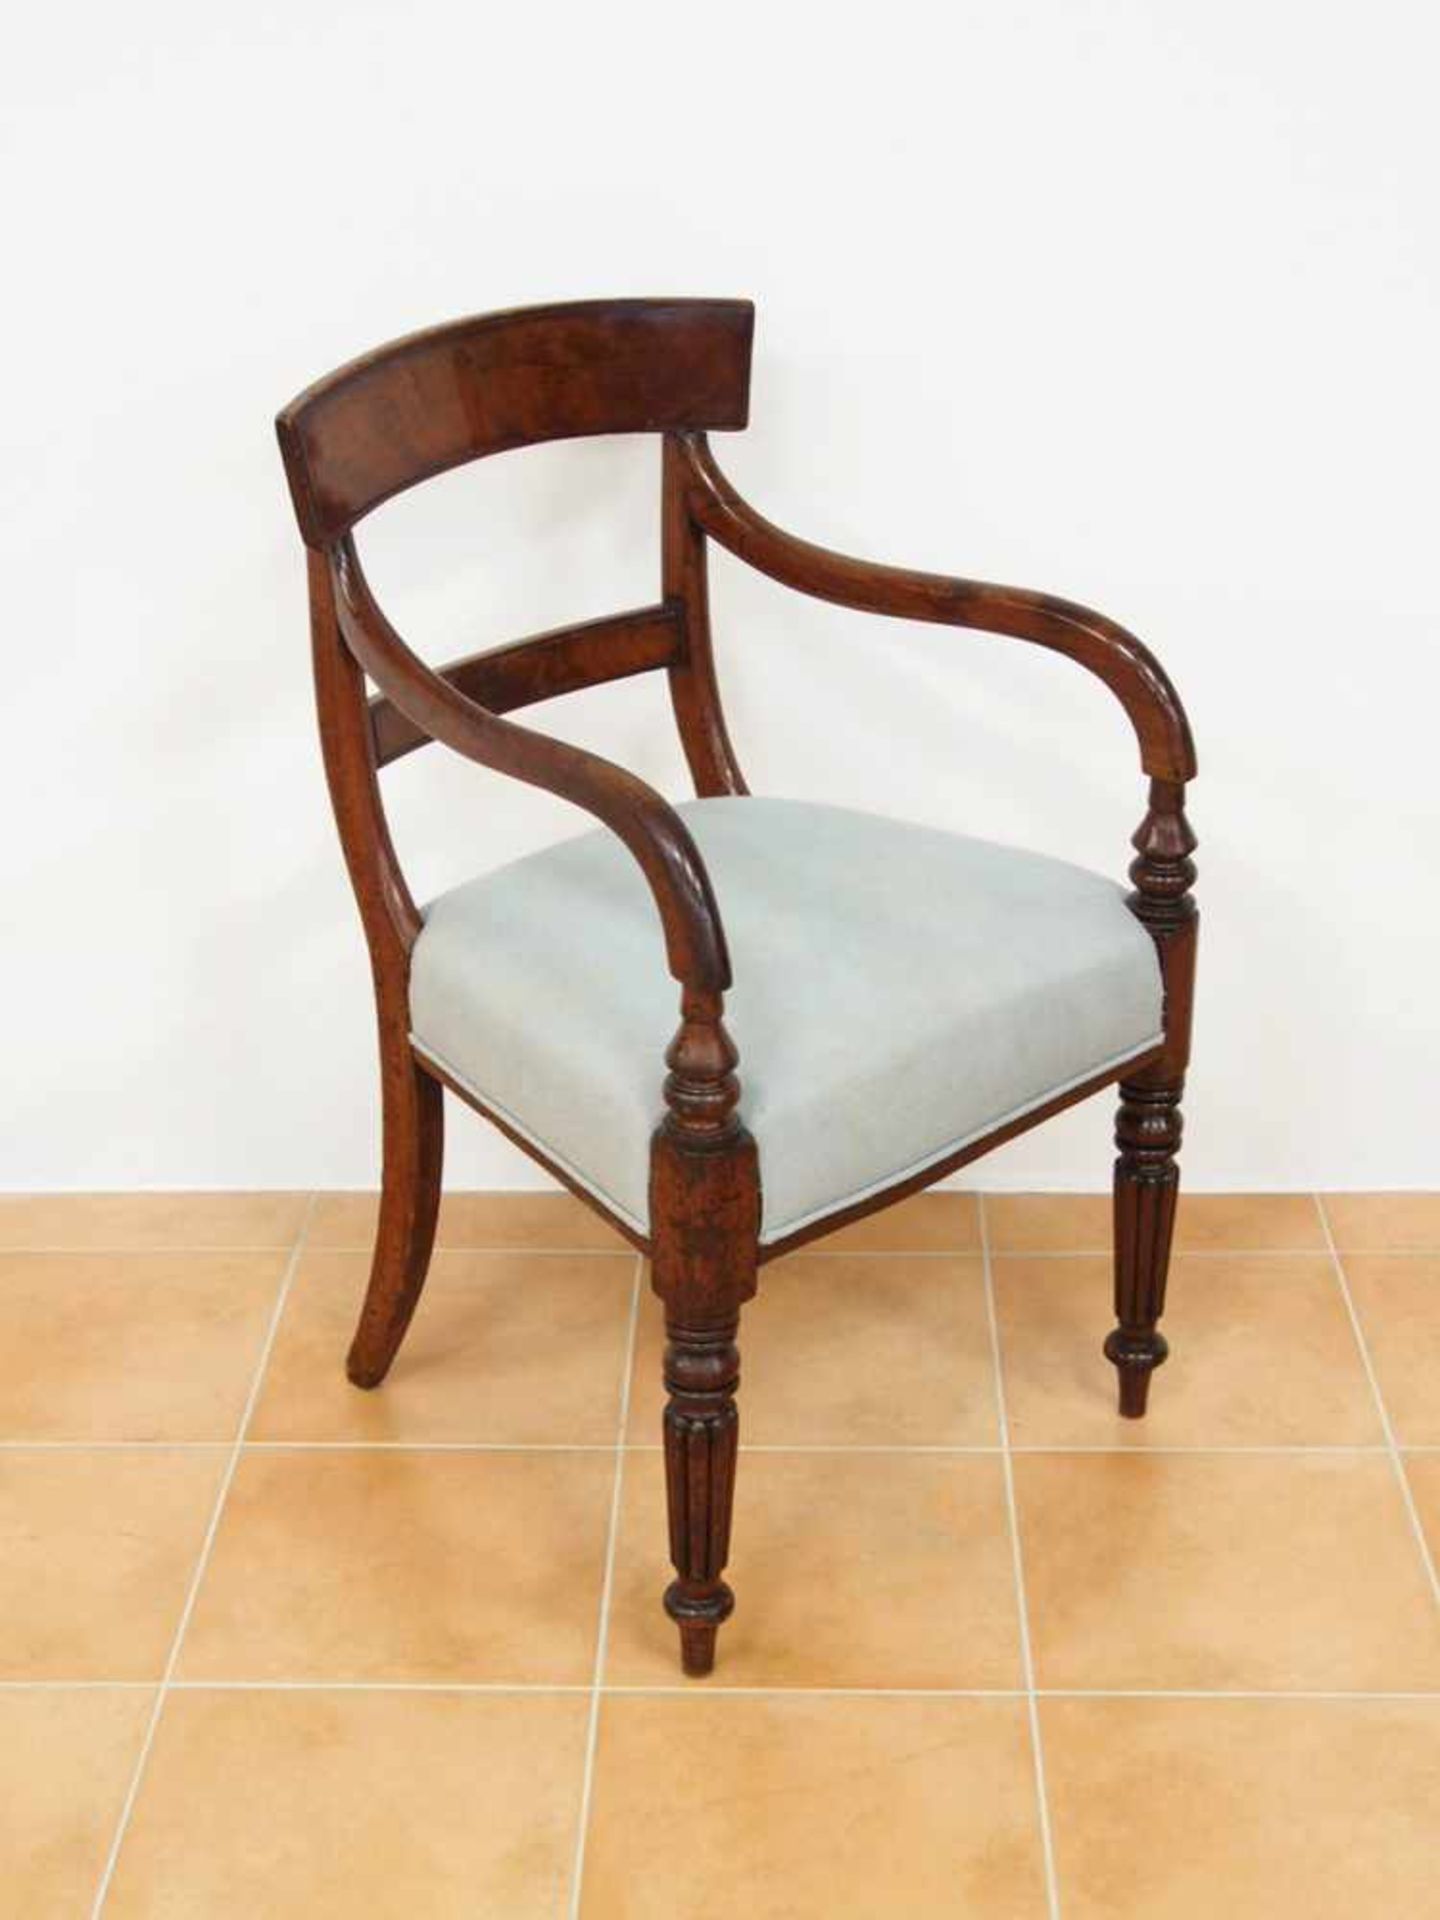 ArmlehnstuhlMahagoni, England 19. Jahrhundert, Höhe 86 cm, Sitzhöhe 48 cm